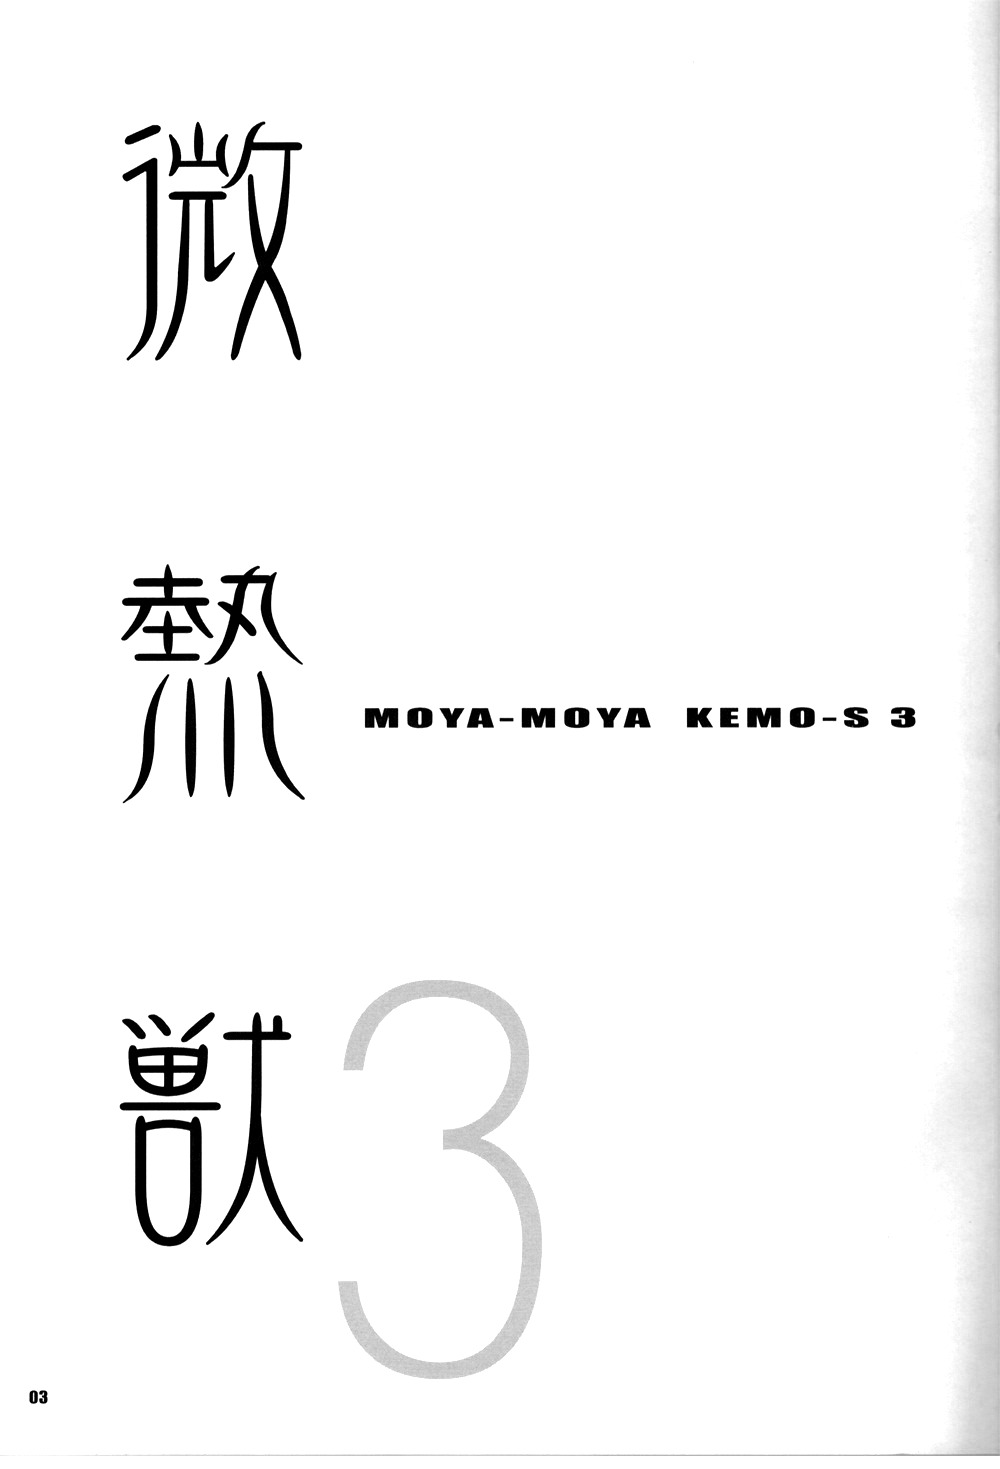 MOYA-MOYA KEMO-S 3